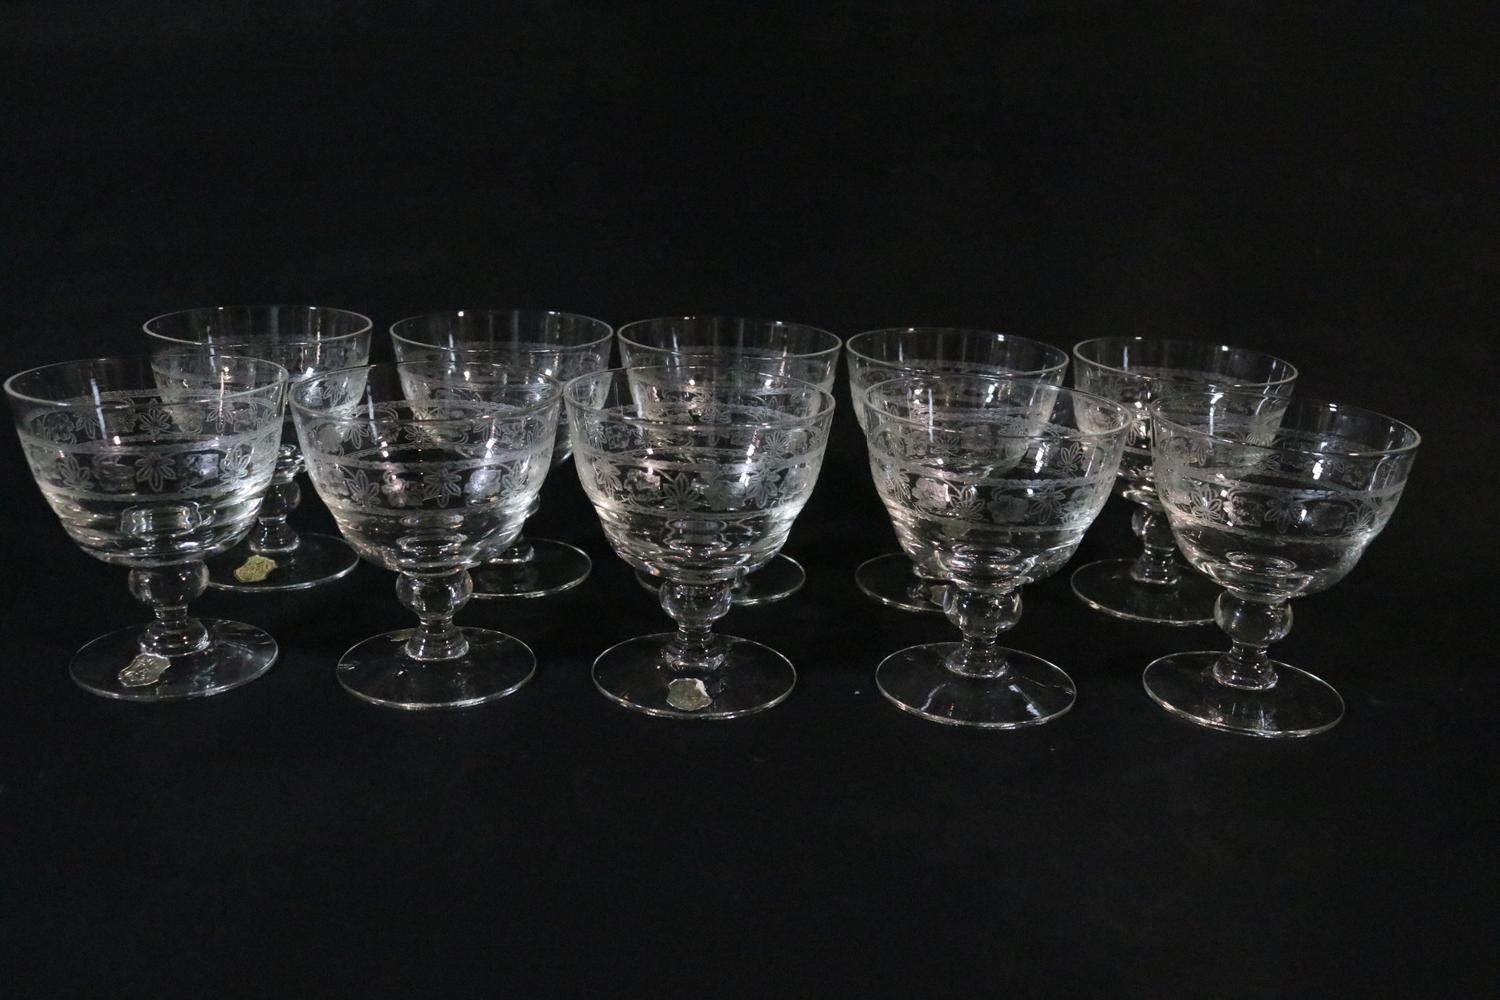 10 engraved glasses - Åfors glass factory probably Edvin Ollers